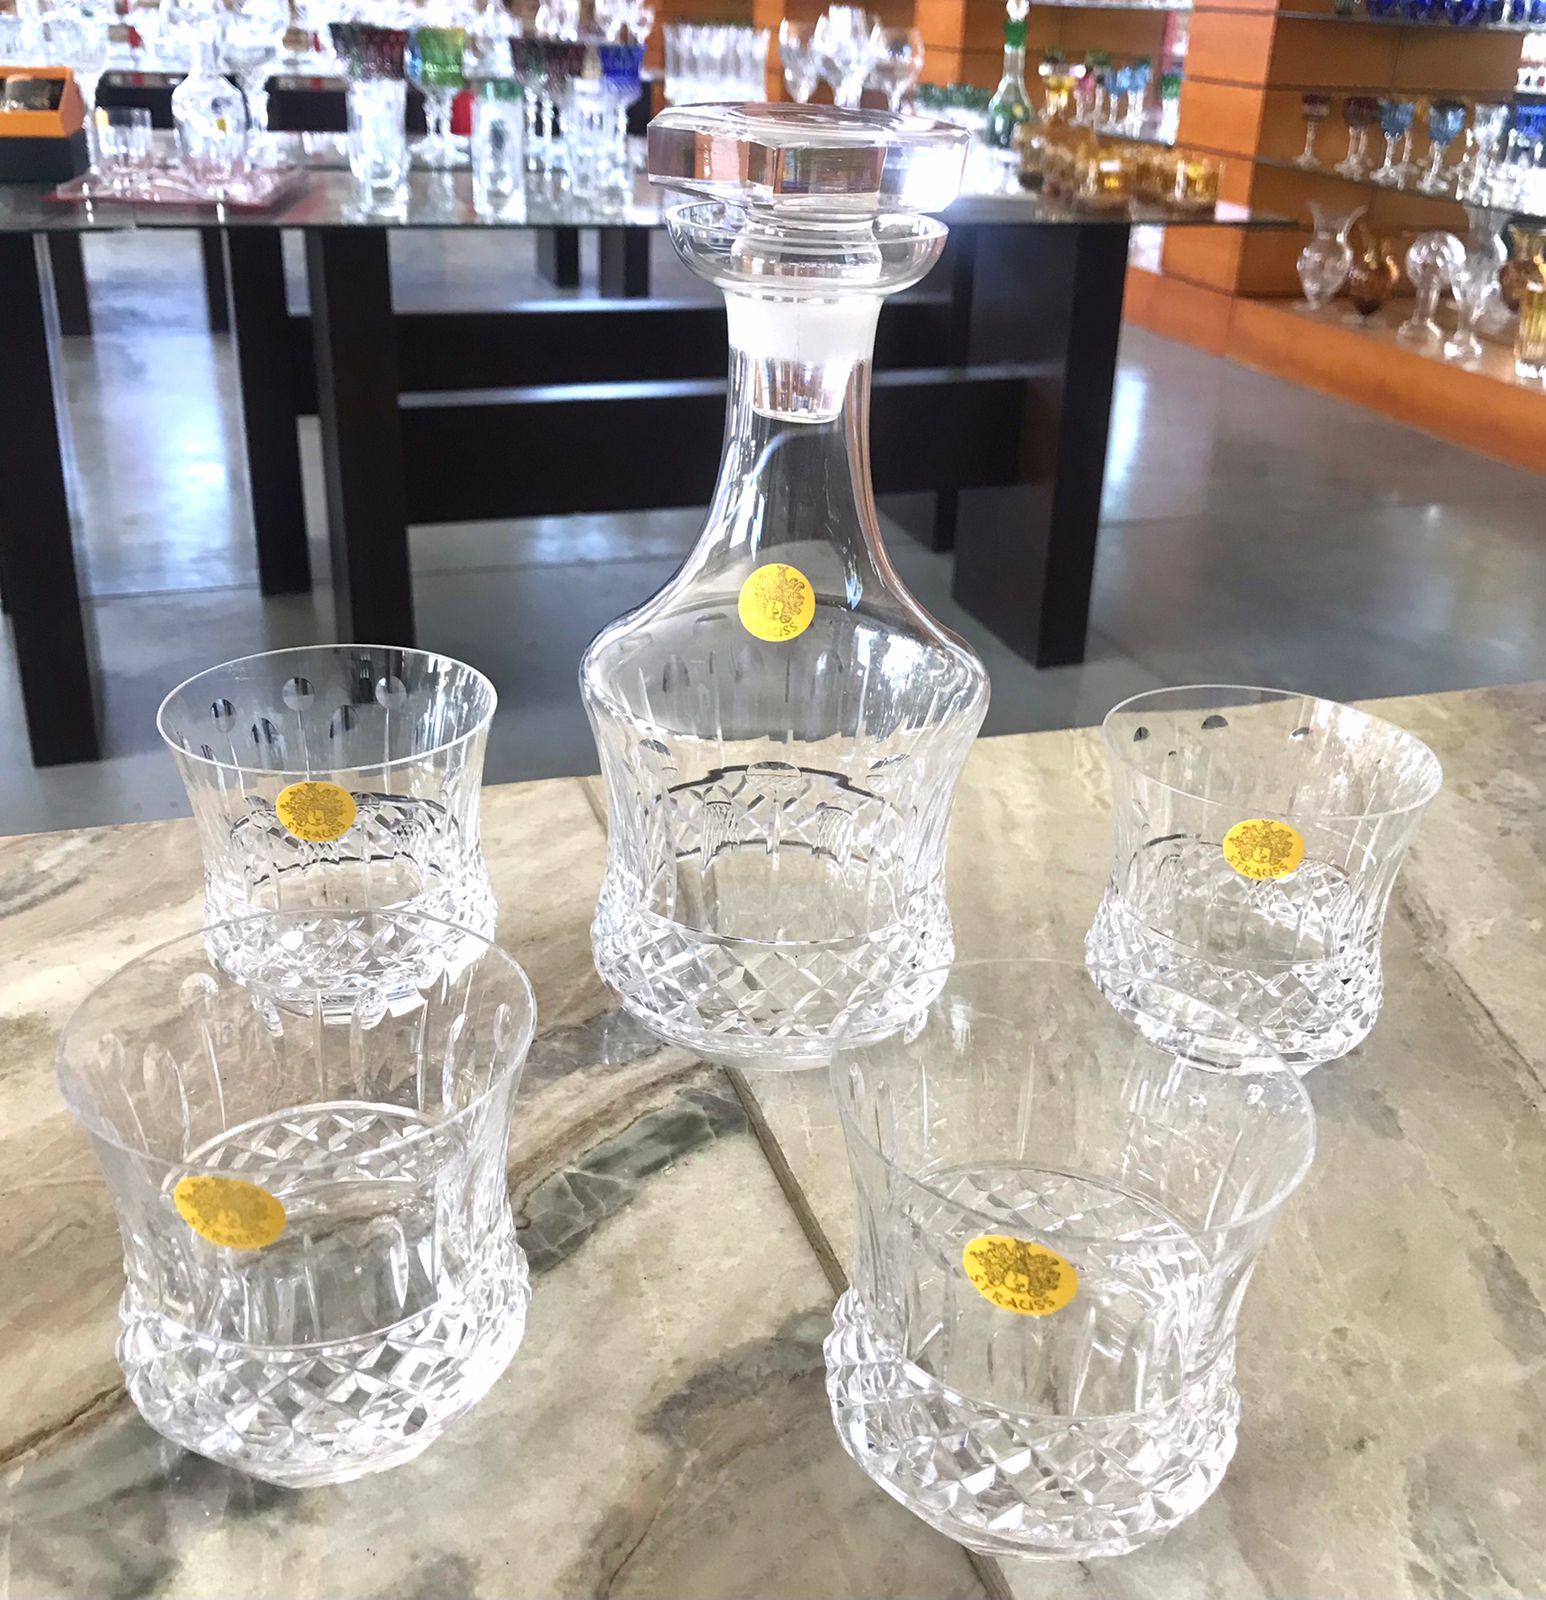 Conjunto de 2 copos altos de cristal para uísque ou água